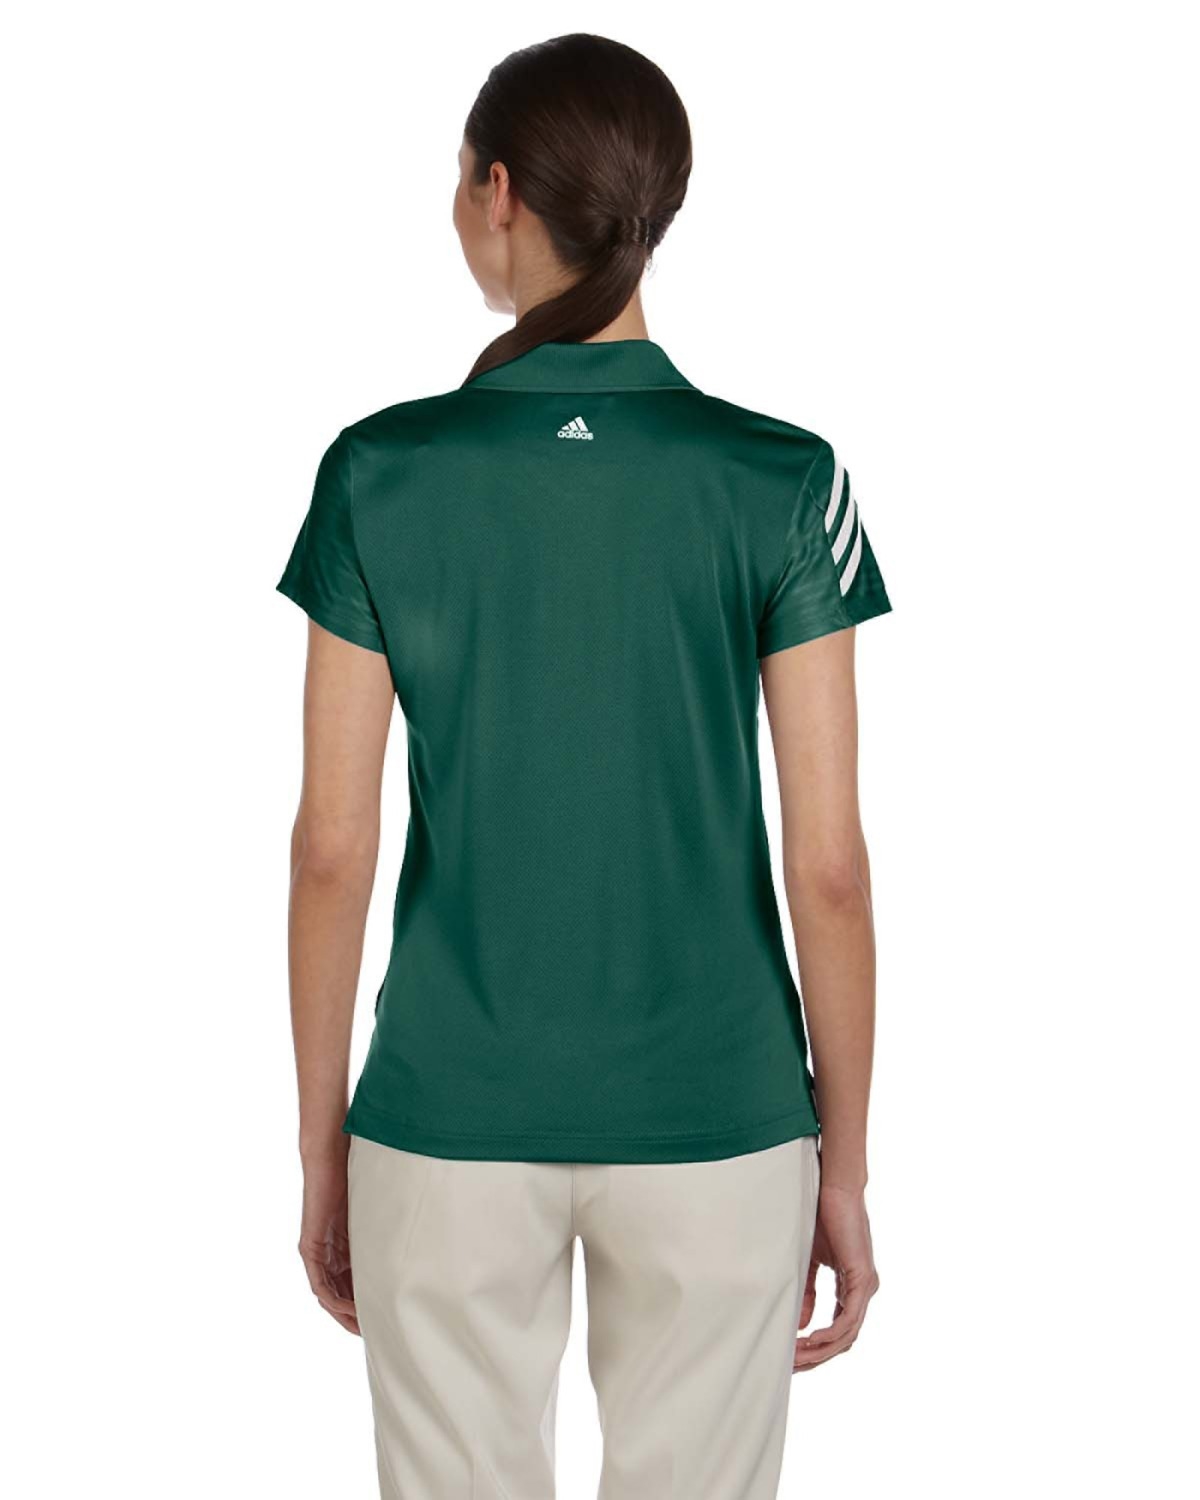 Adidas Golf A135 Womens ClimaCool Mesh Polo Shirts